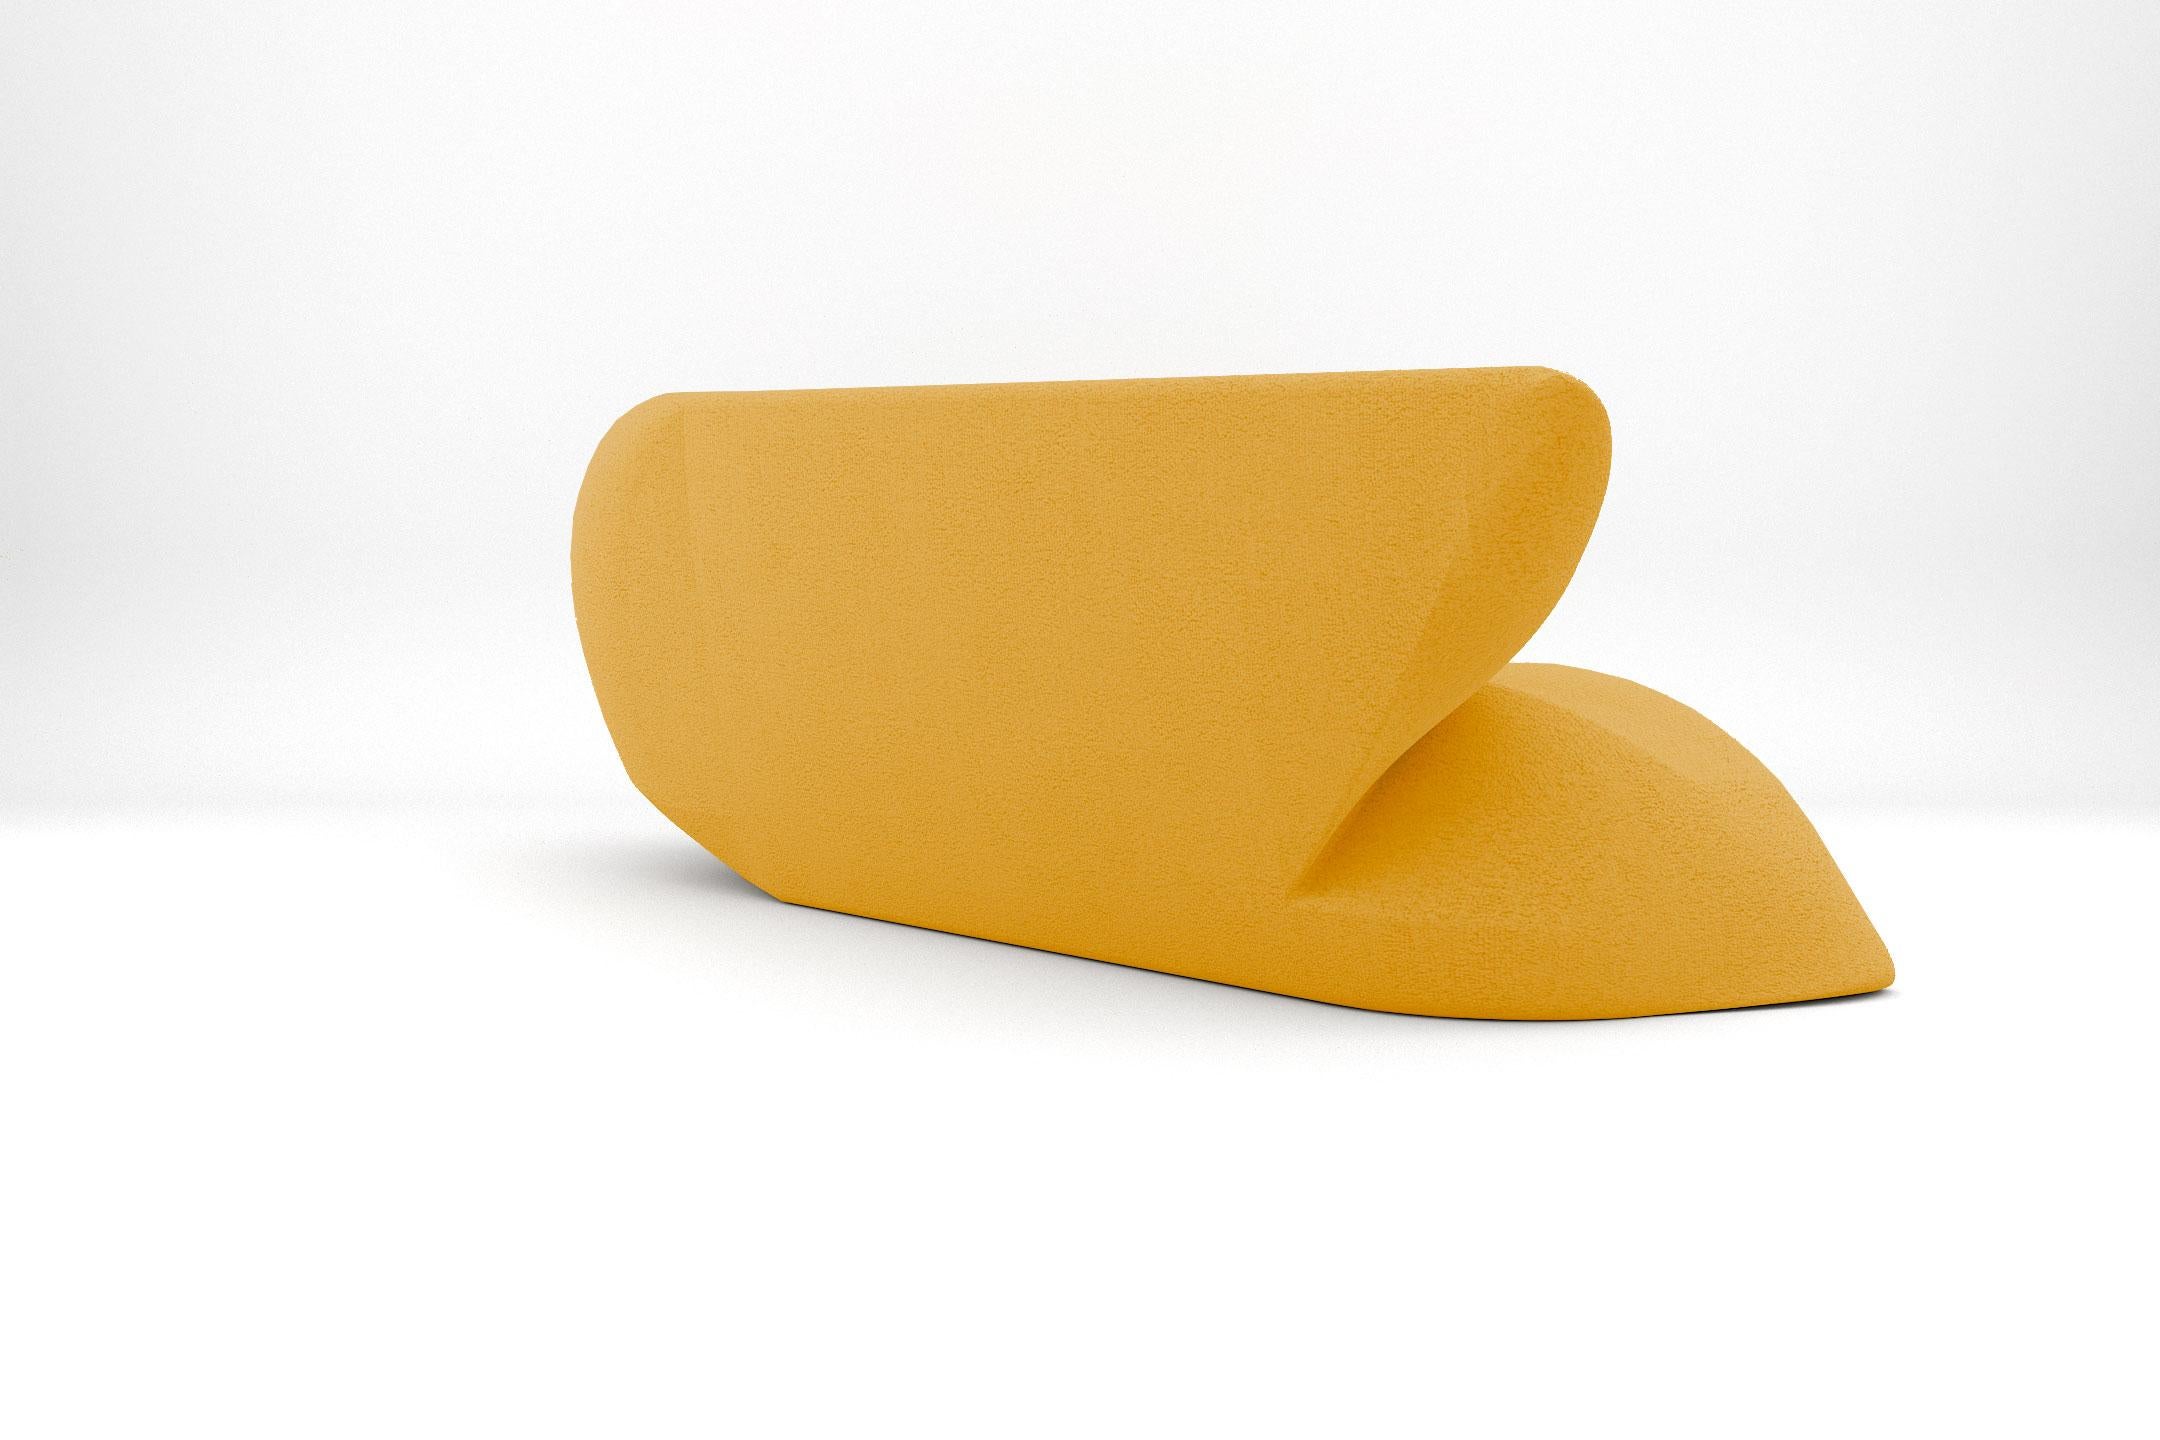 European Delta Sofa - Modern Lemon Yellow Upholstered Three Seat Sofa For Sale